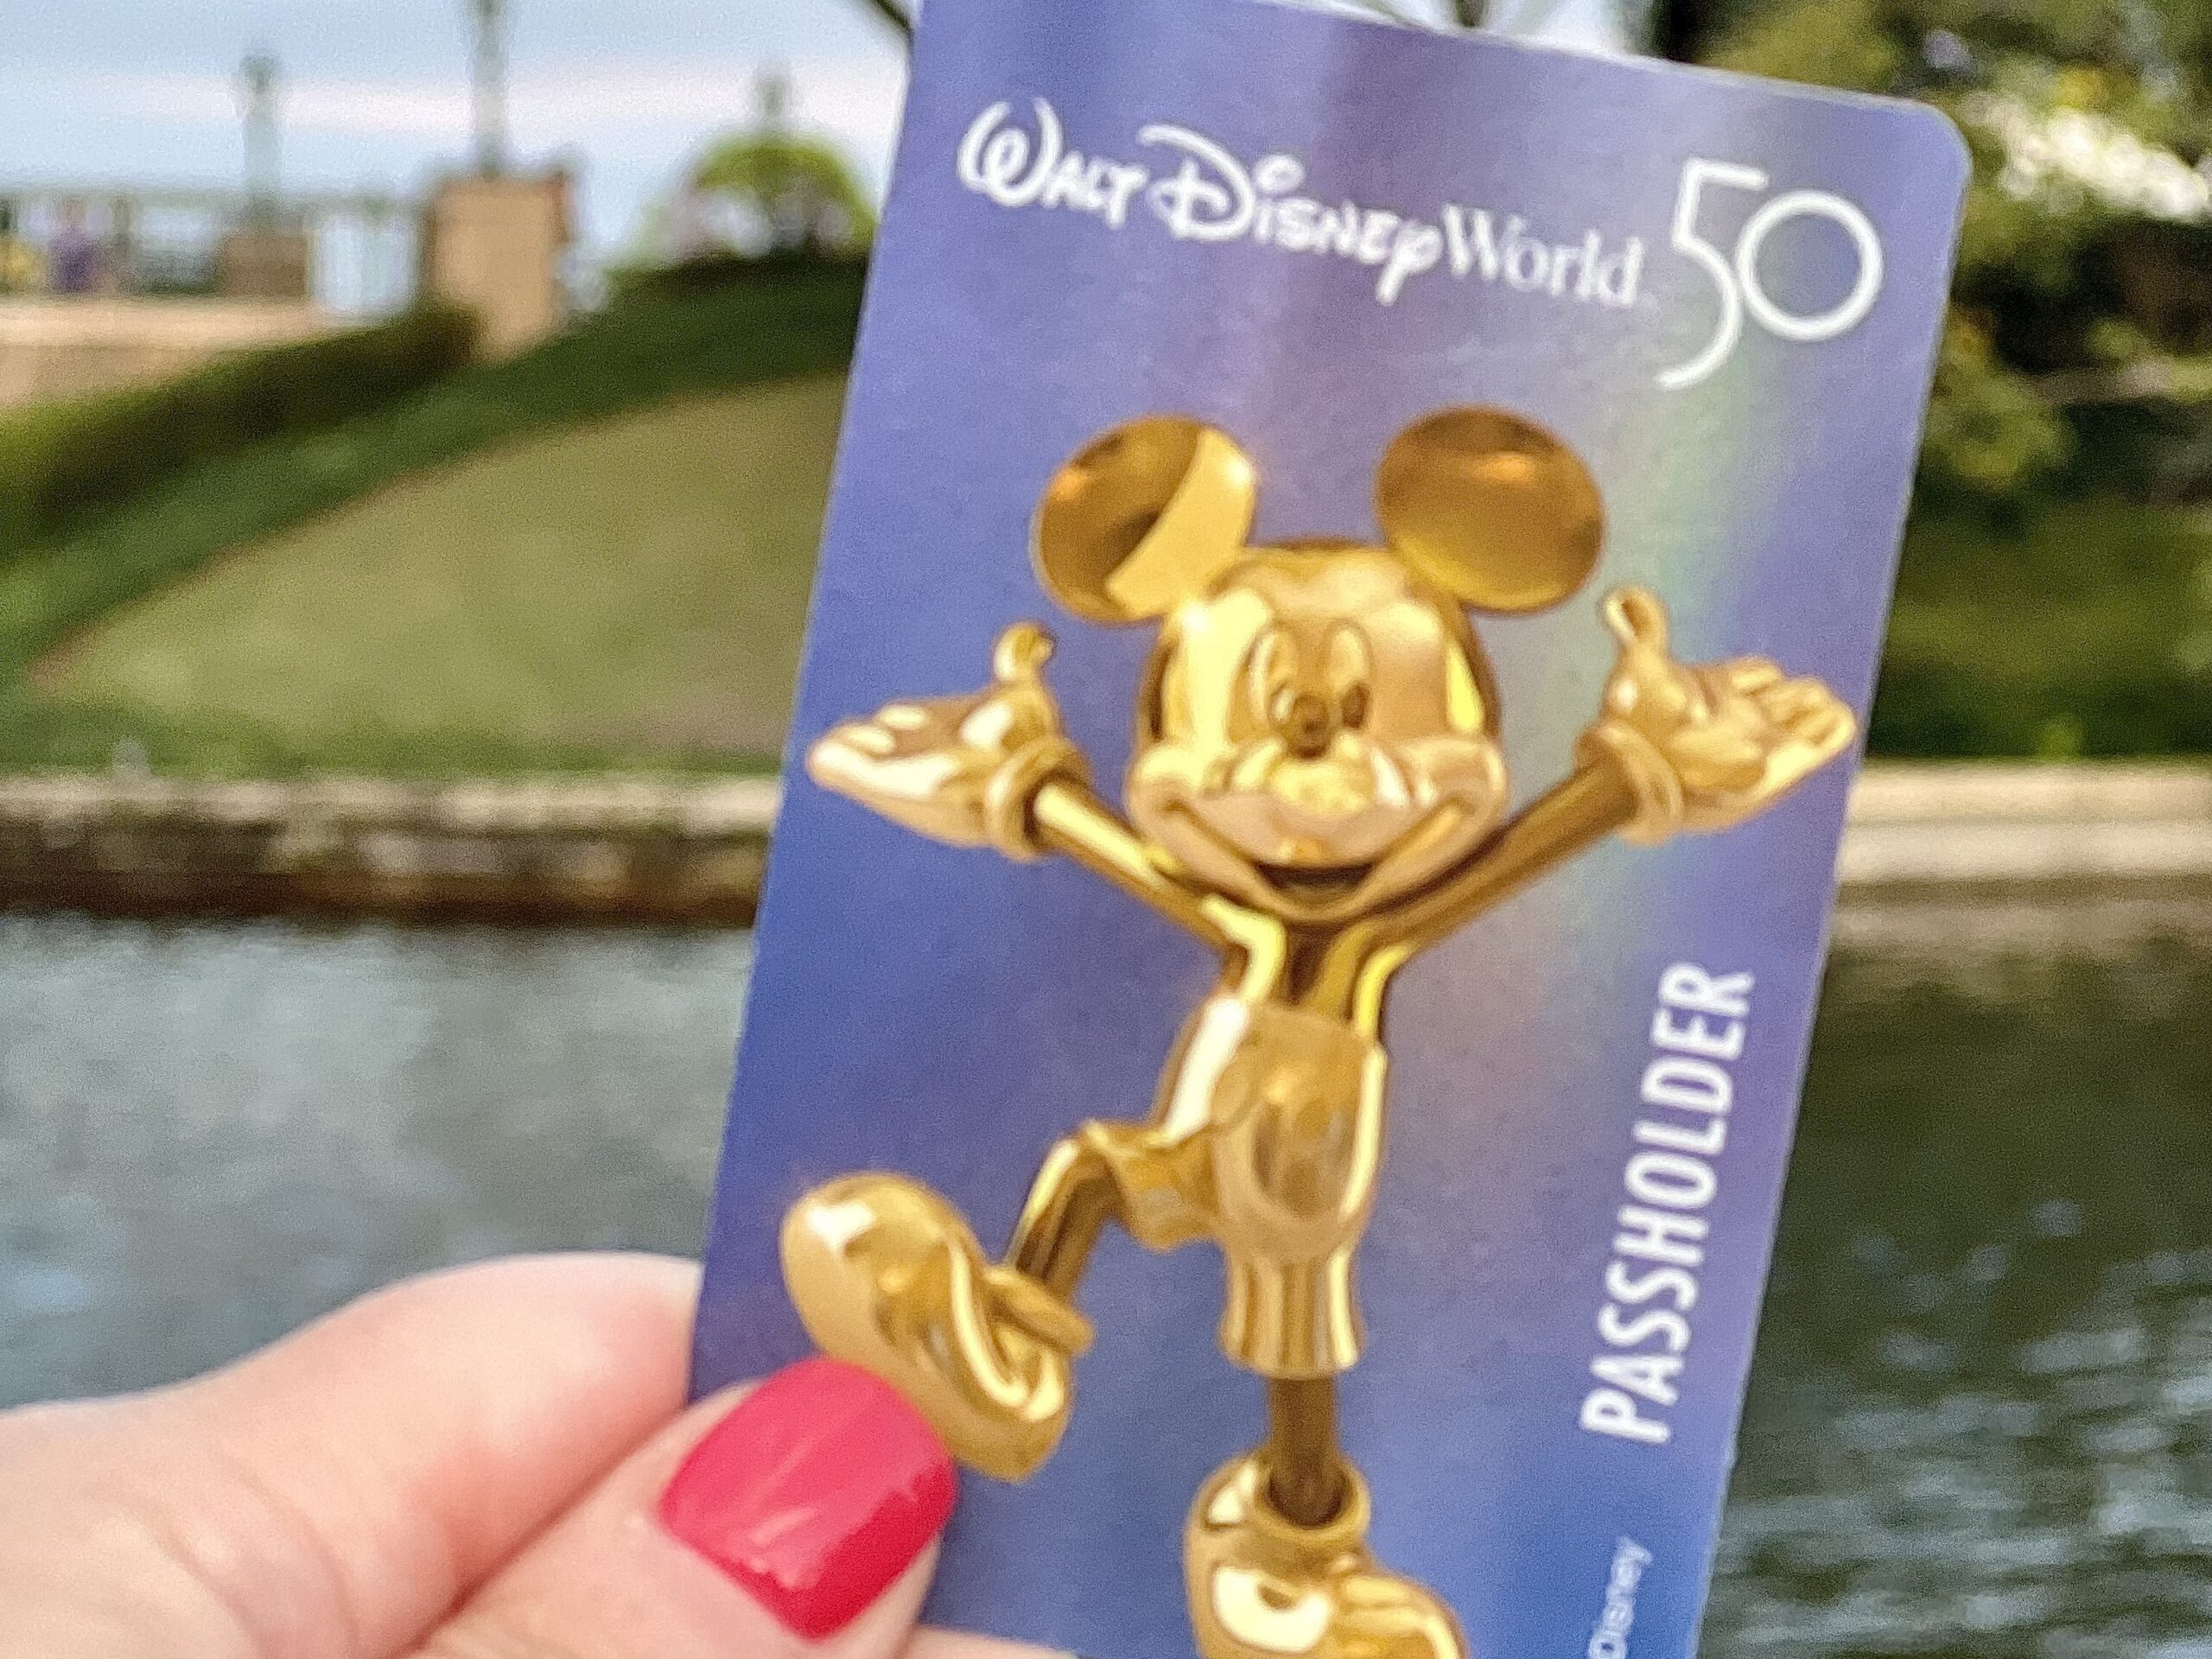 Disney World annual pass